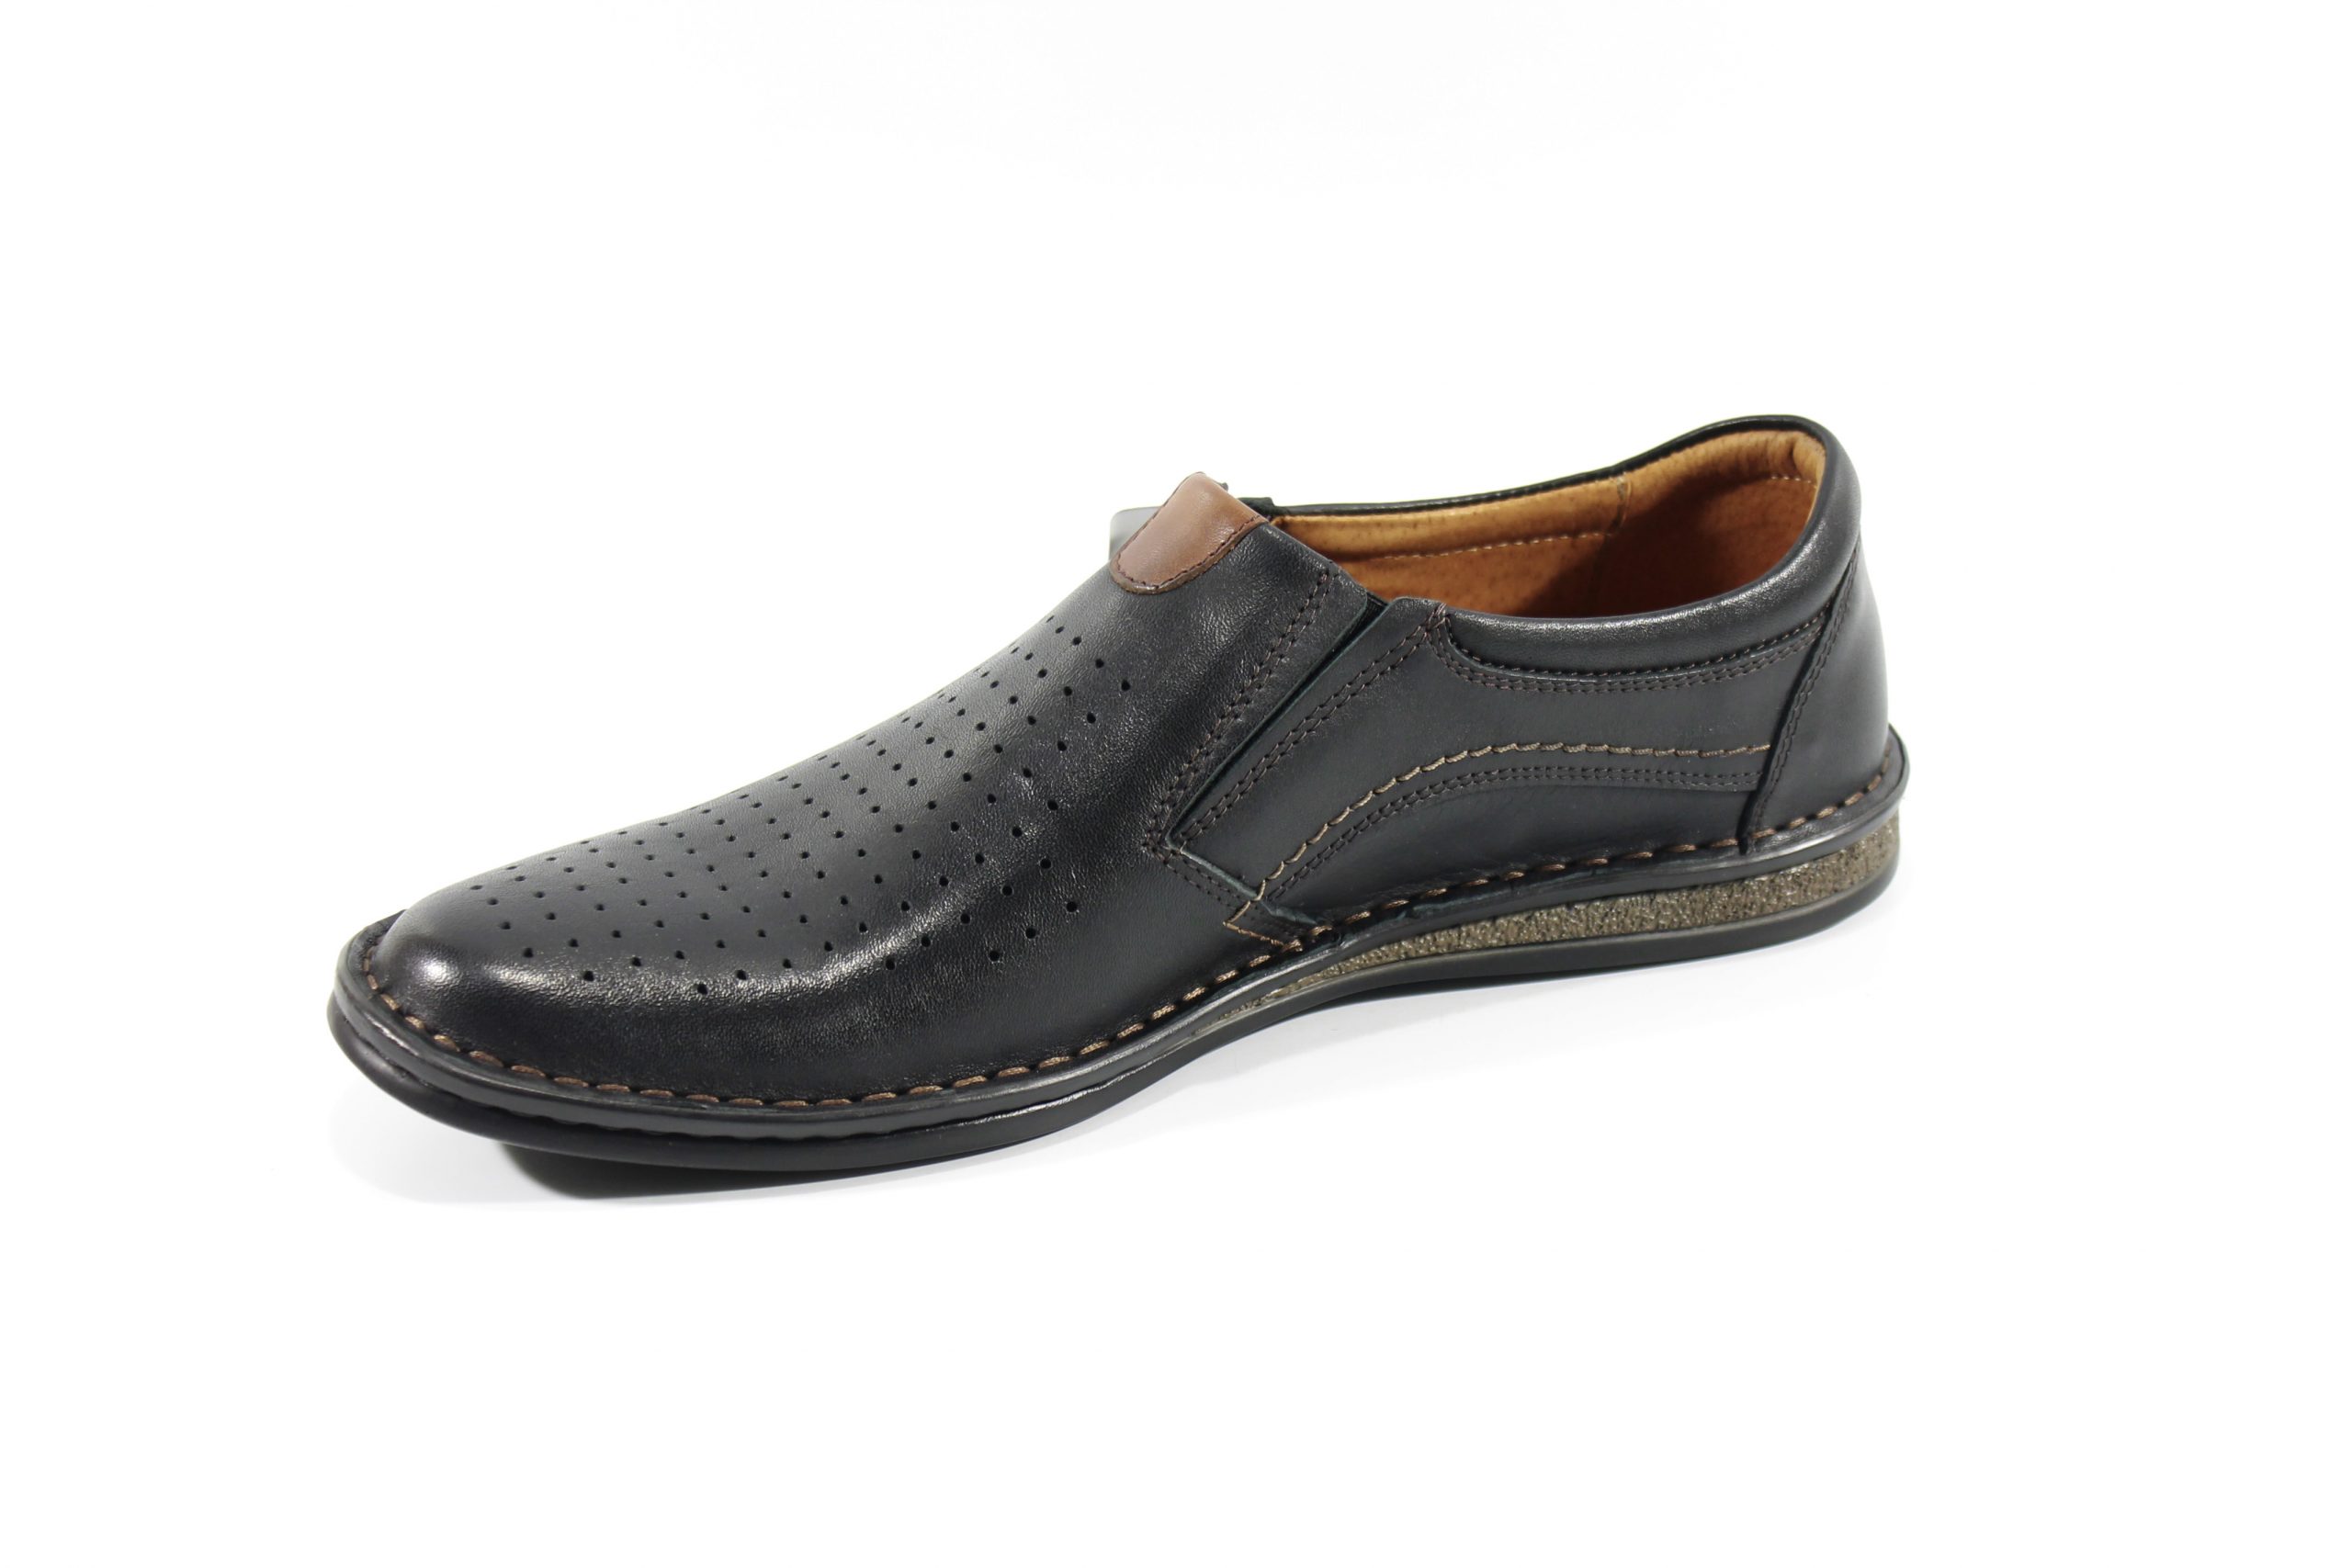 KRISBUT leather shoes - Bestshoes